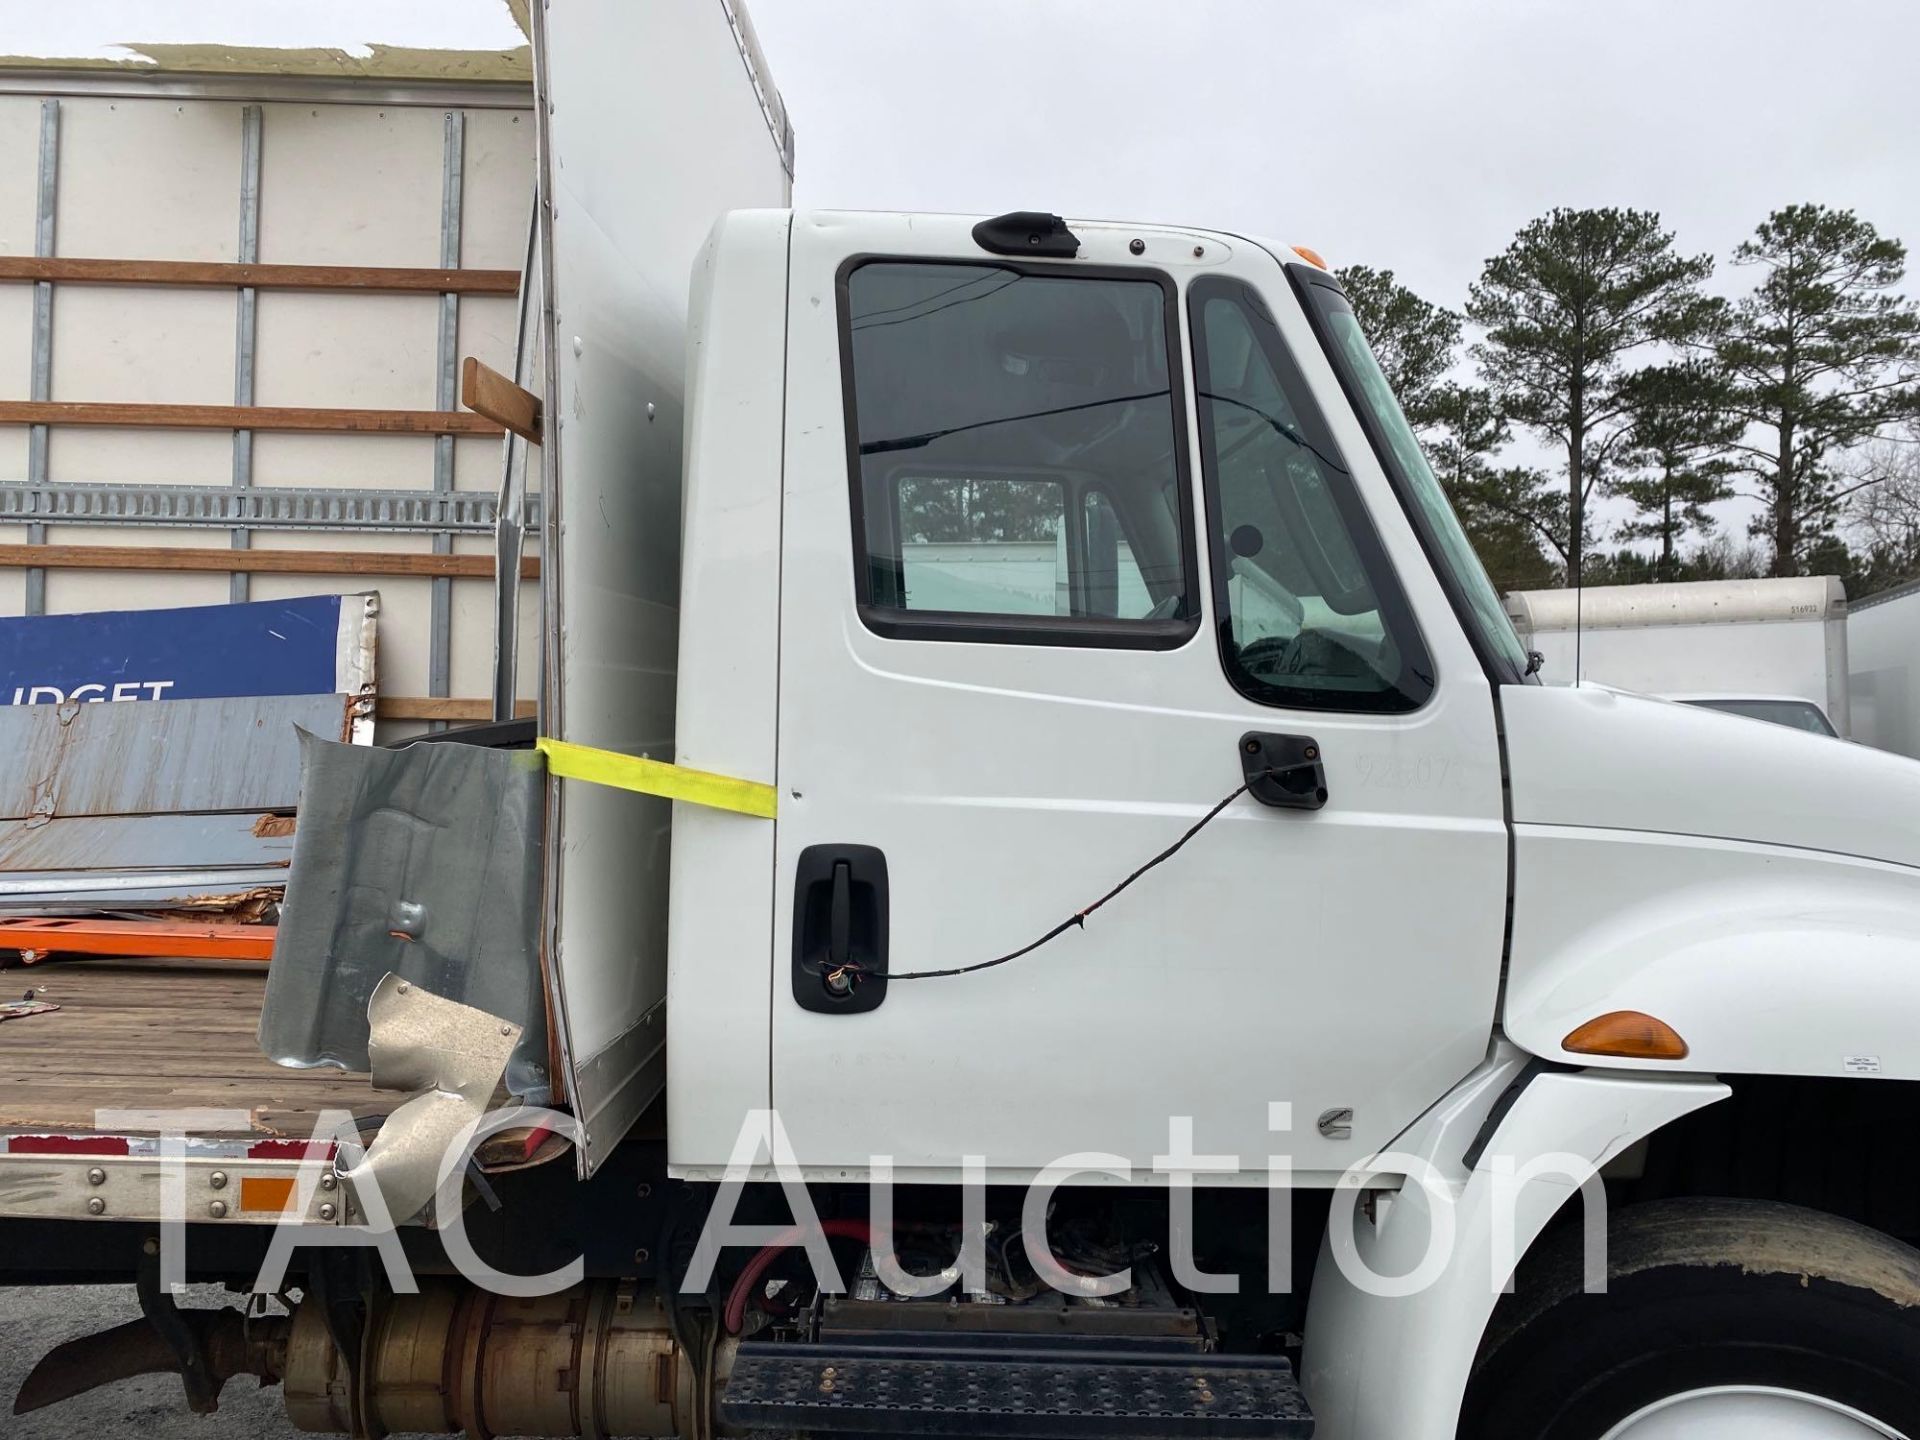 2019 International Durastar 4300 26ft Box Truck - Image 37 of 85